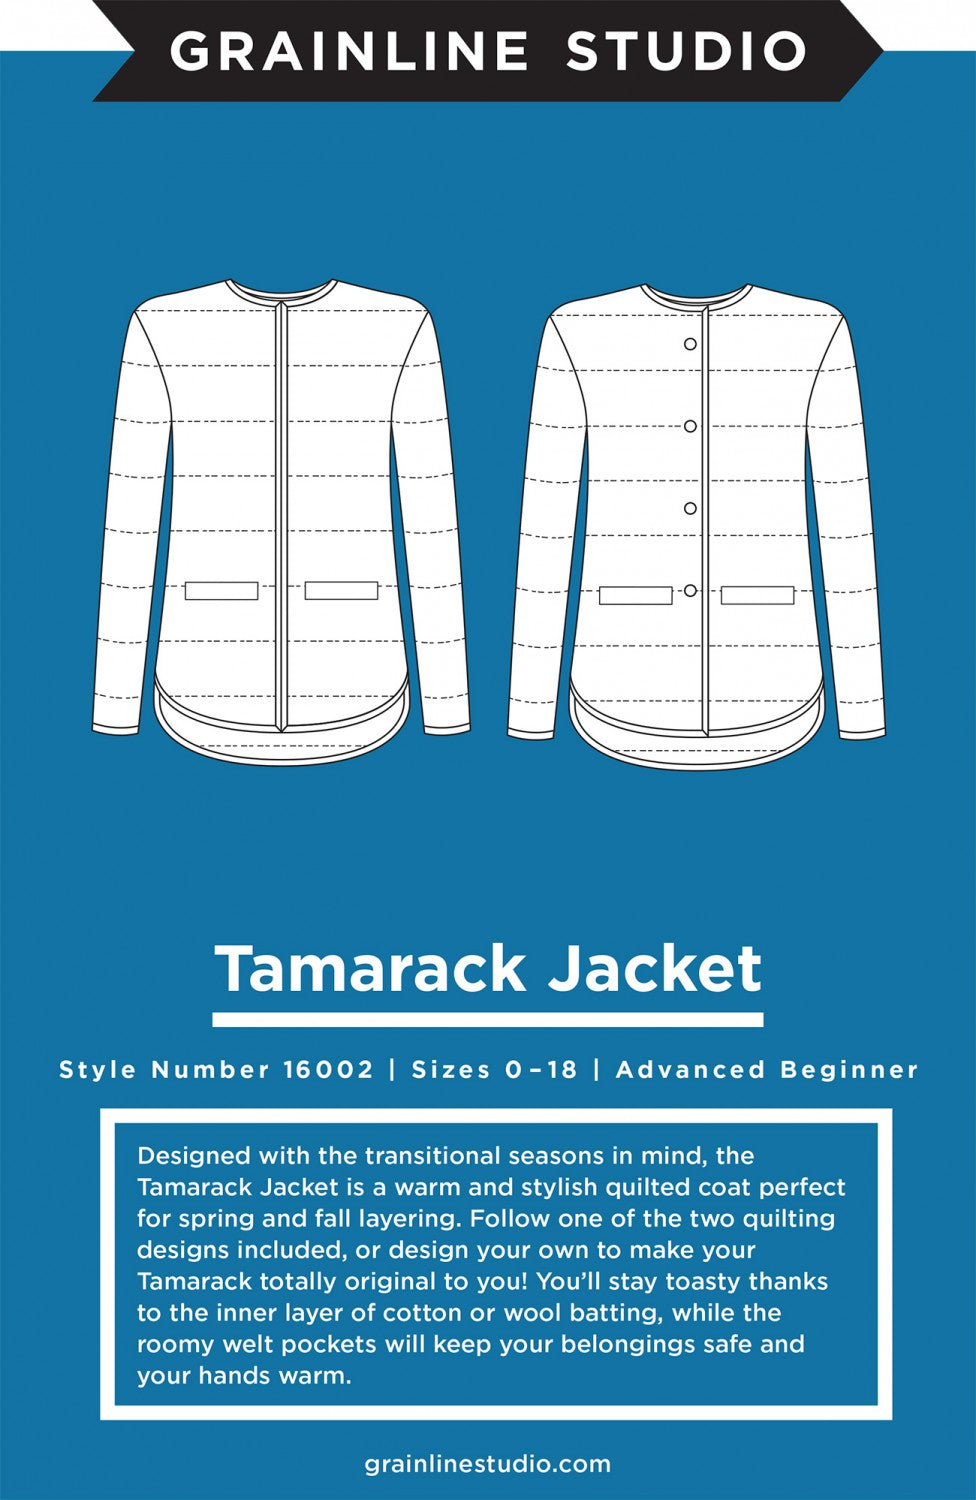 Tamarack Jacket Sizes 0-18 by Grainaline Studio